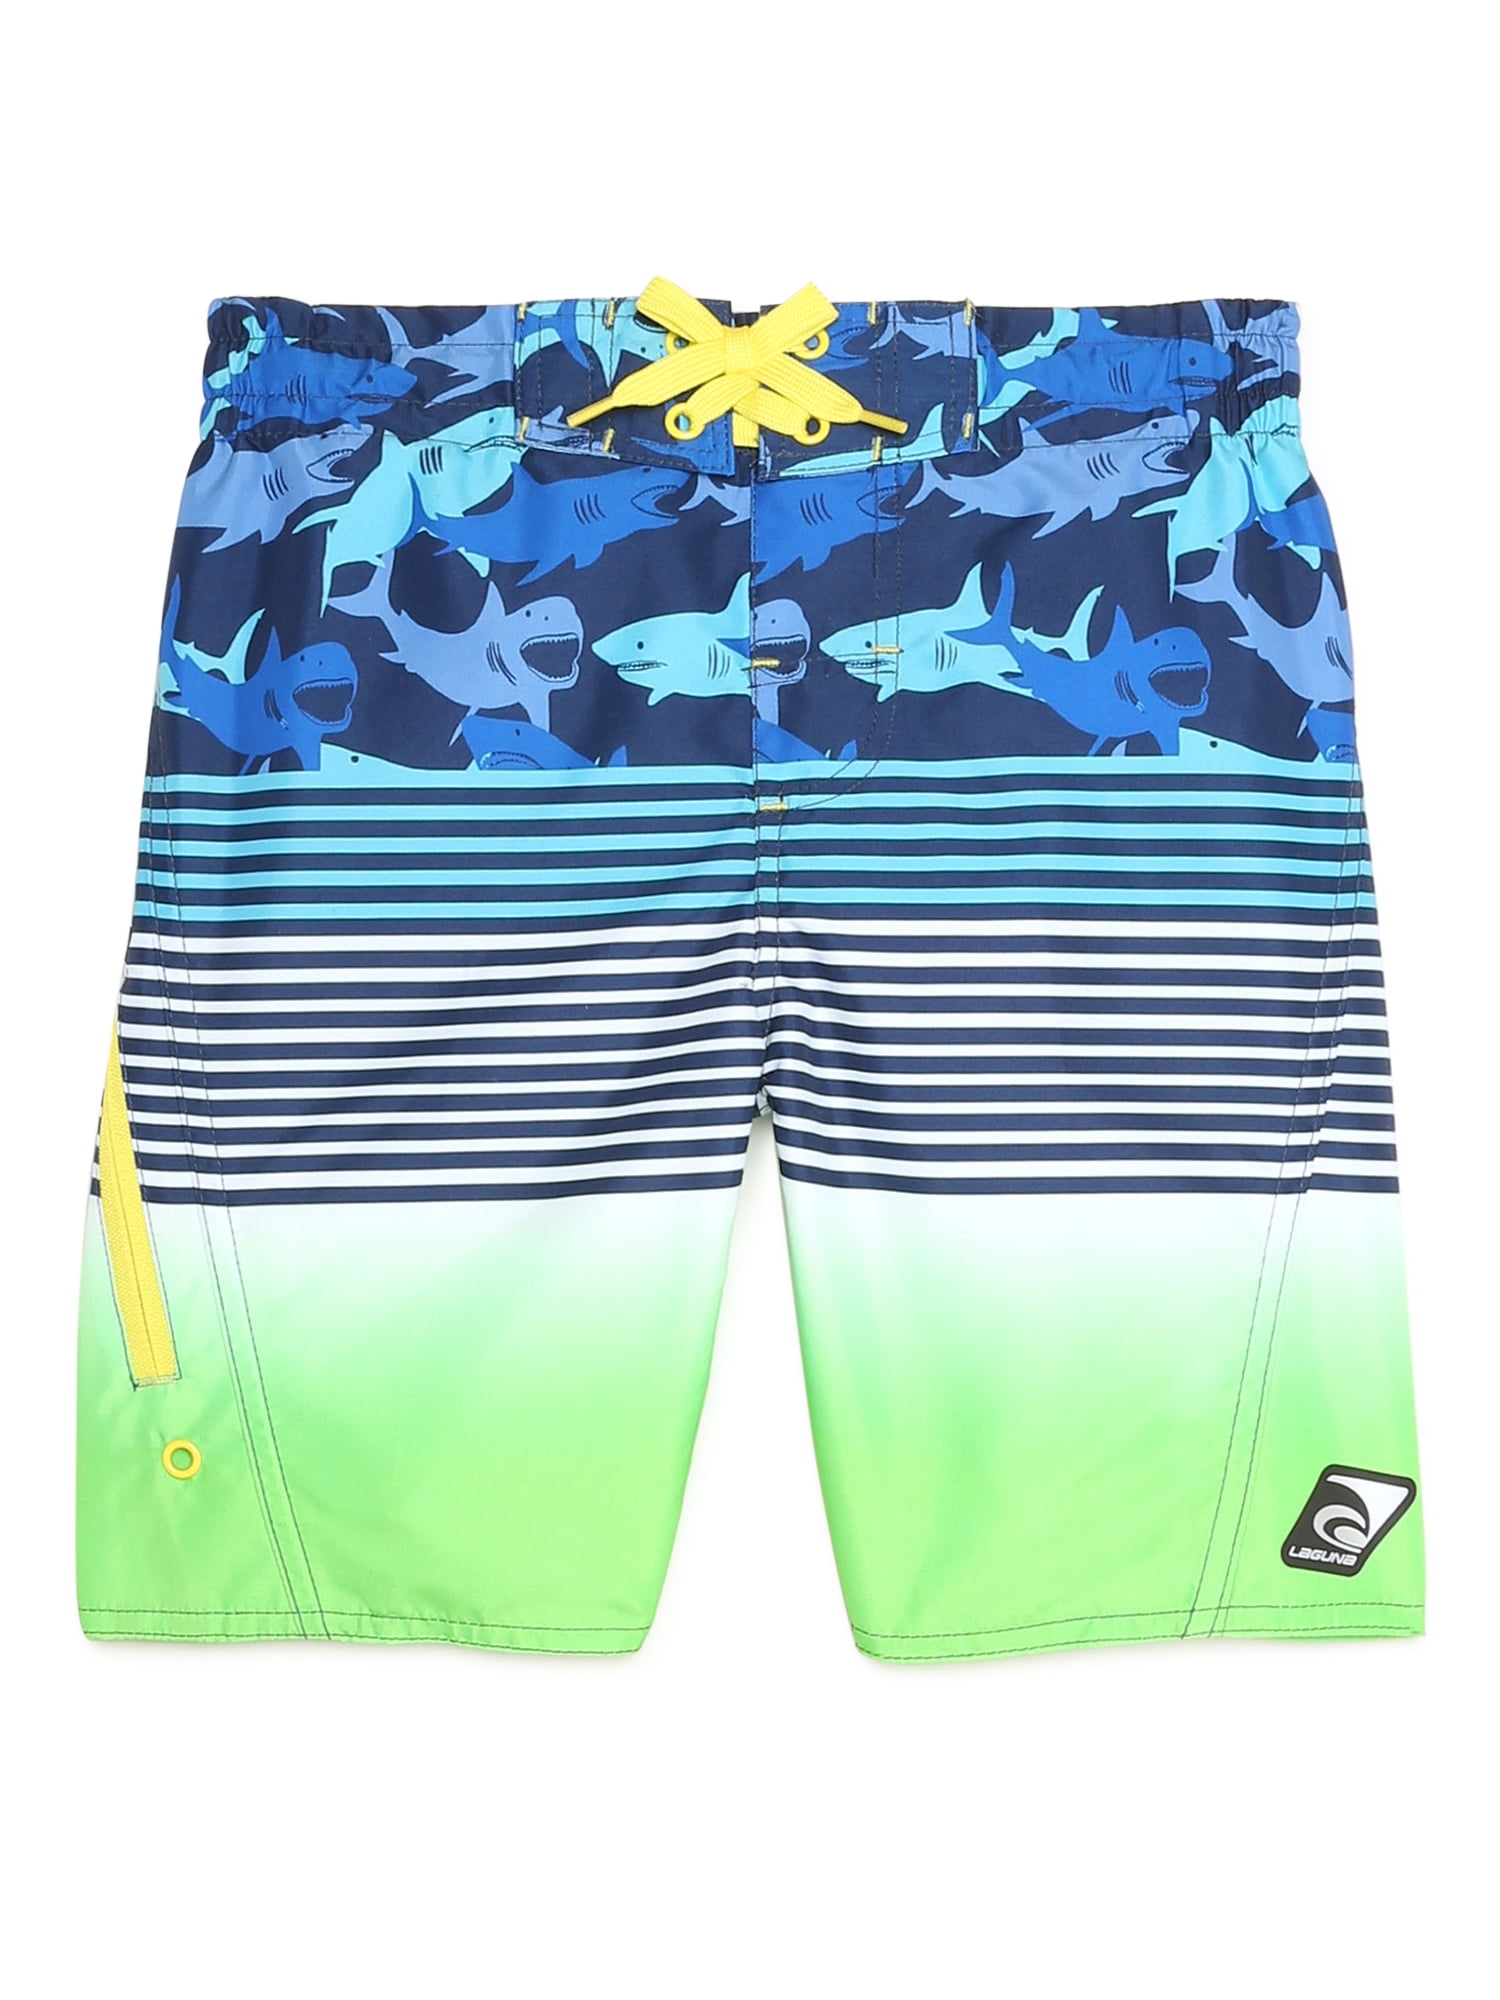 NWT Boys Laguna Board Shorts Swim Trunk Camouflage Blues Summer Water Beach Fun 